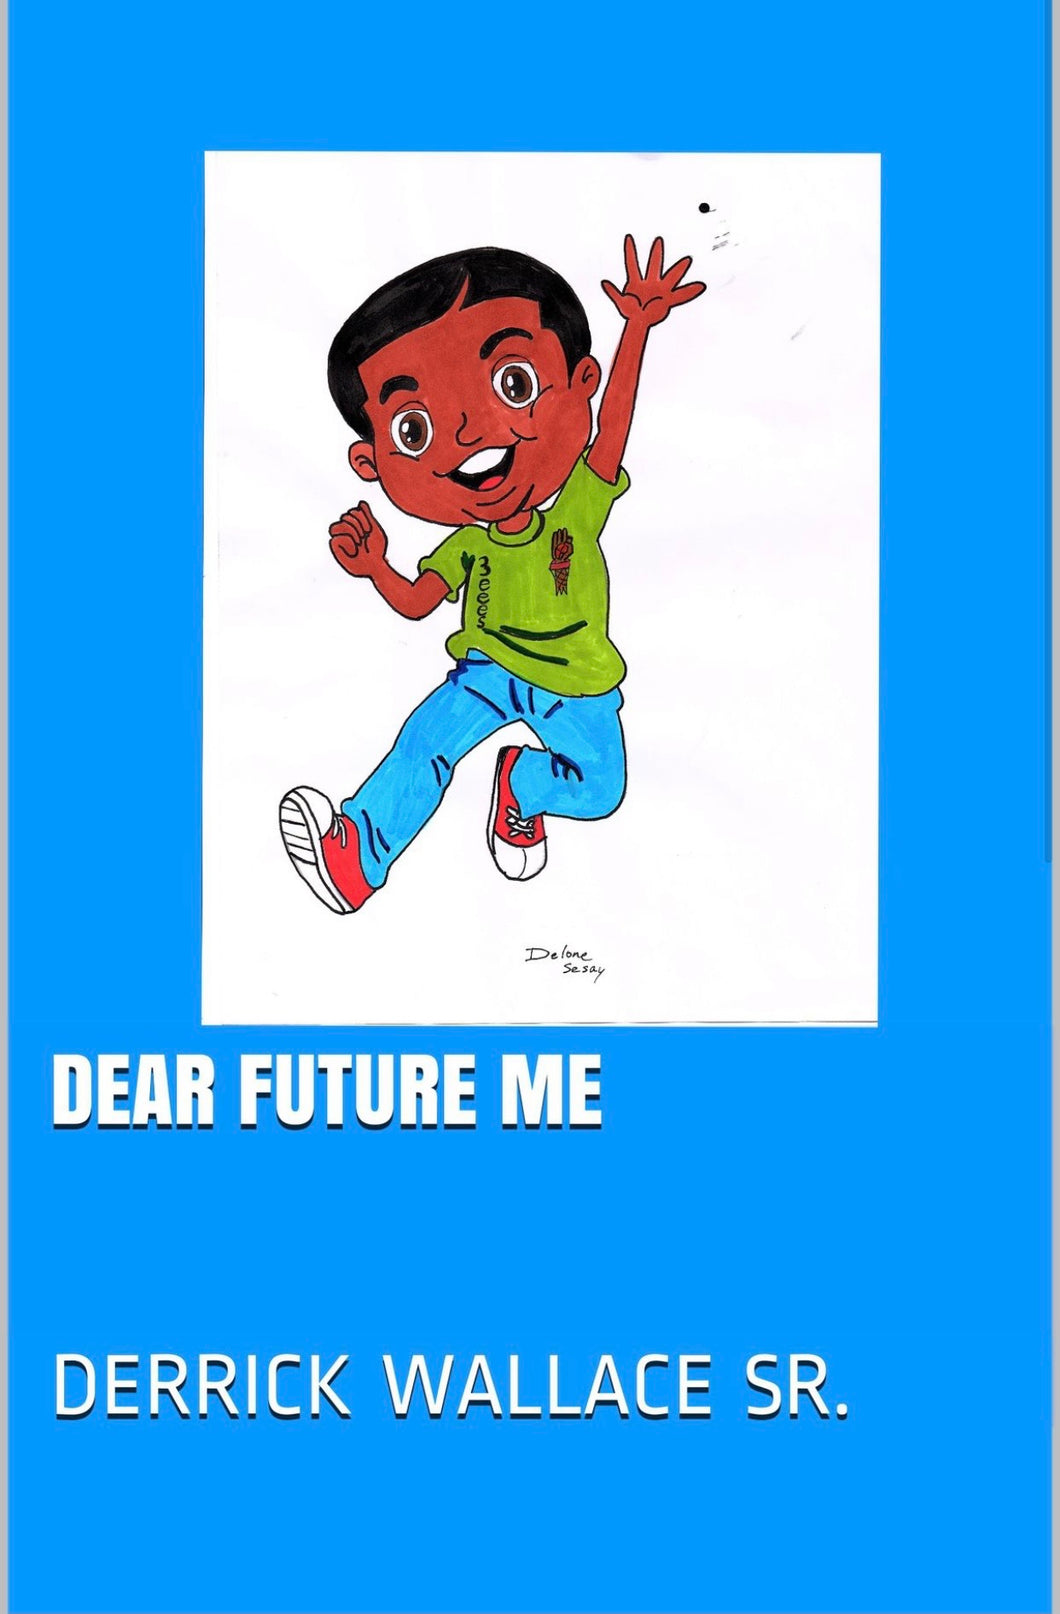 Dear Future Me by Derrick Wallace